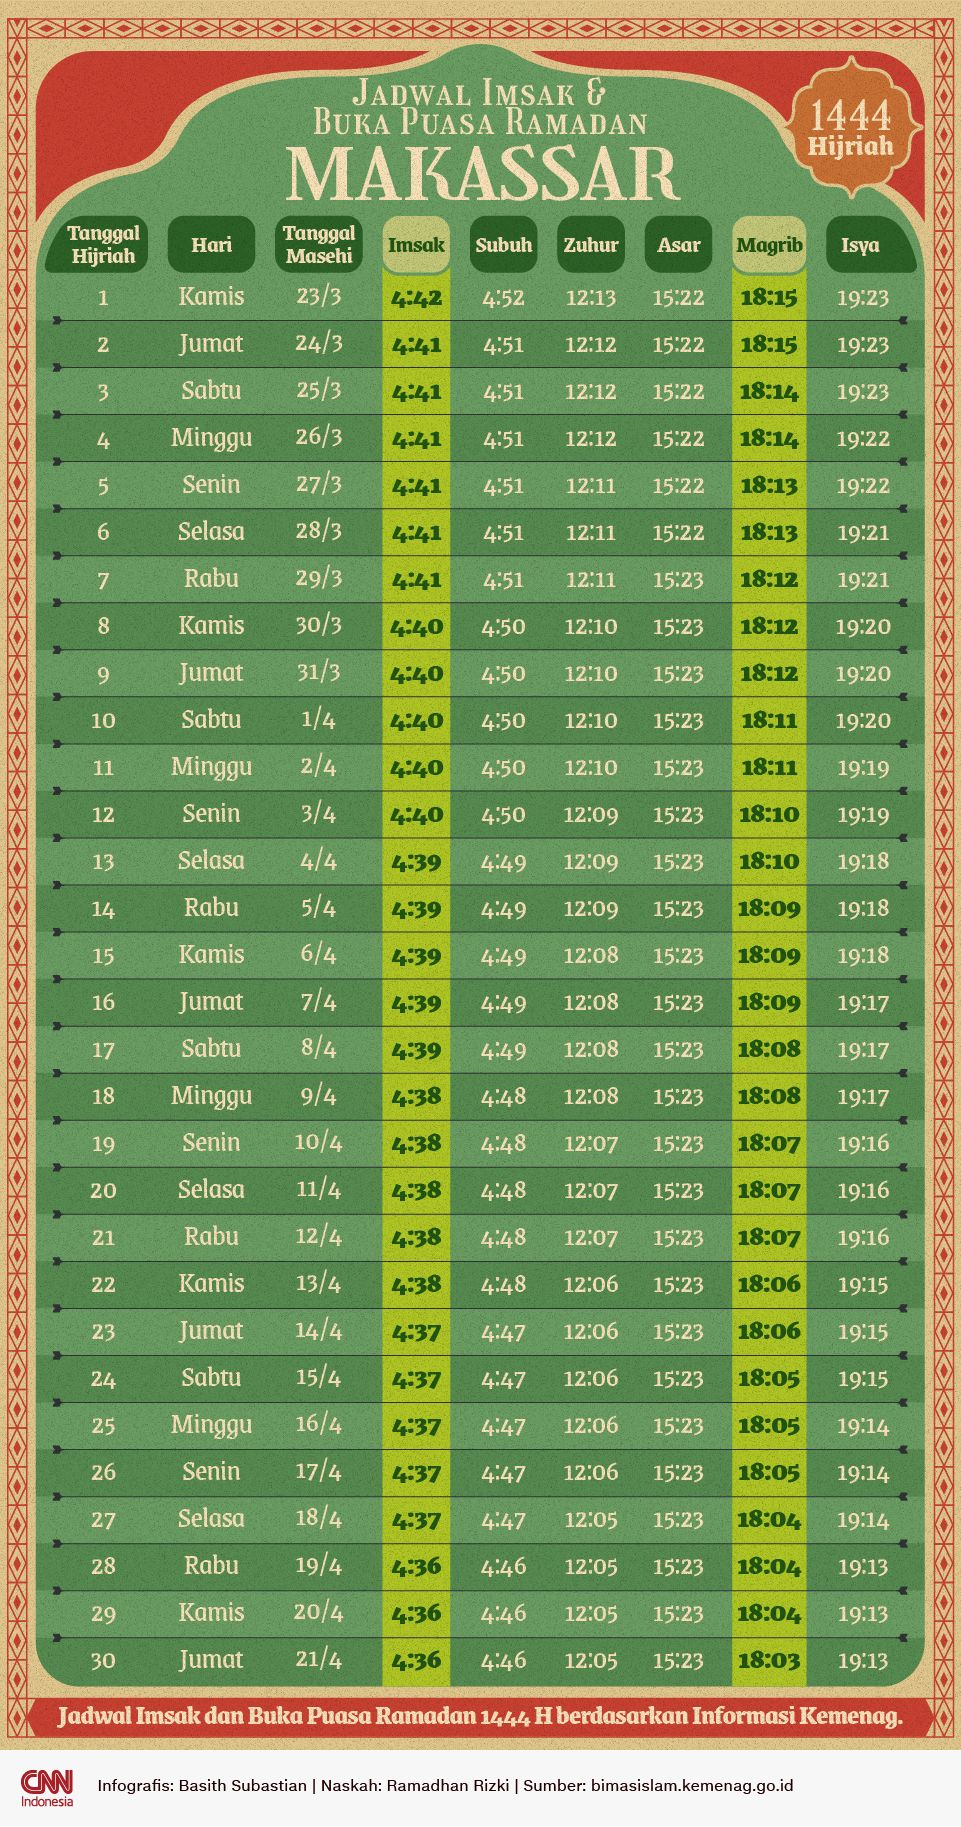 MAKASSAR Fasting Schedule Infographic